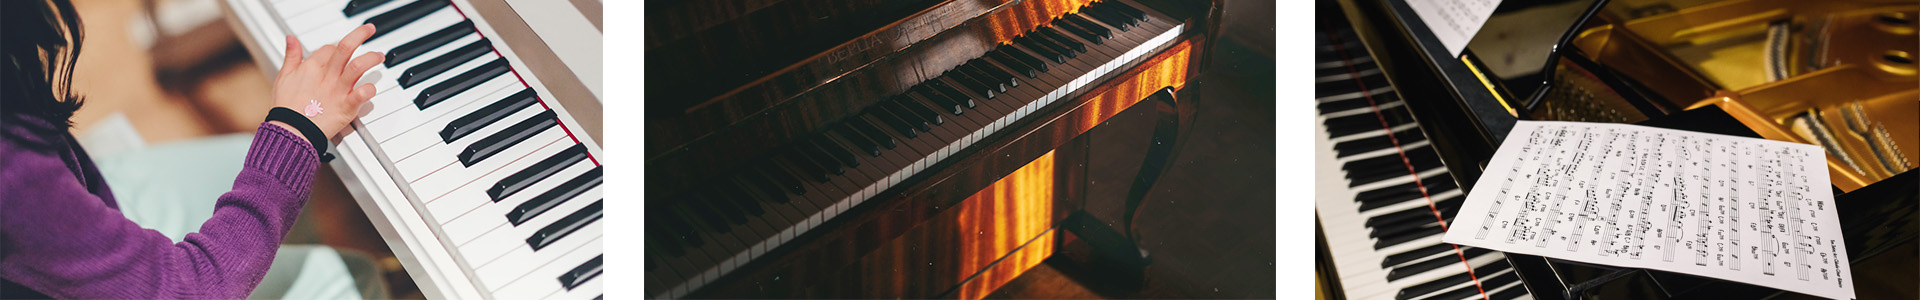 Pianos 